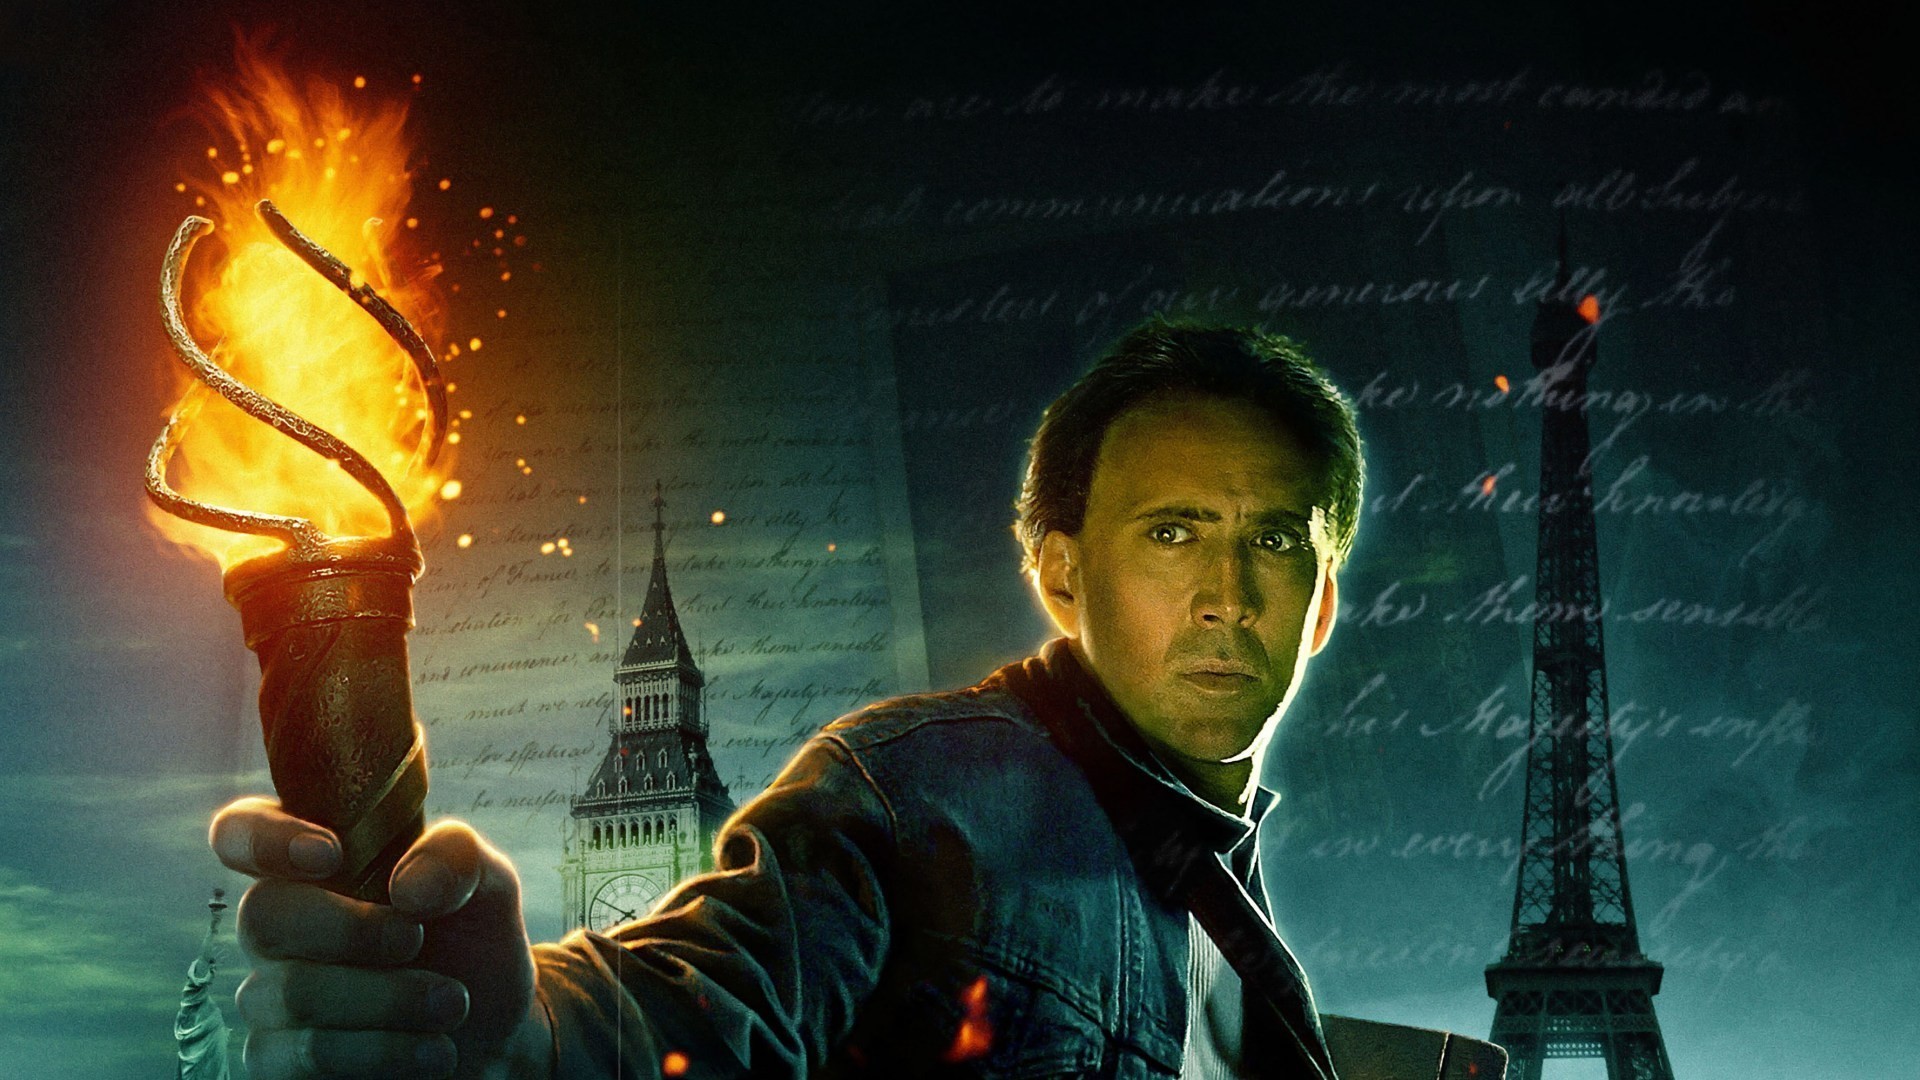 General 1920x1080 Nicolas Cage movies fire Eiffel Tower Big Ben National Treasure (Movie) 2004 (Year)